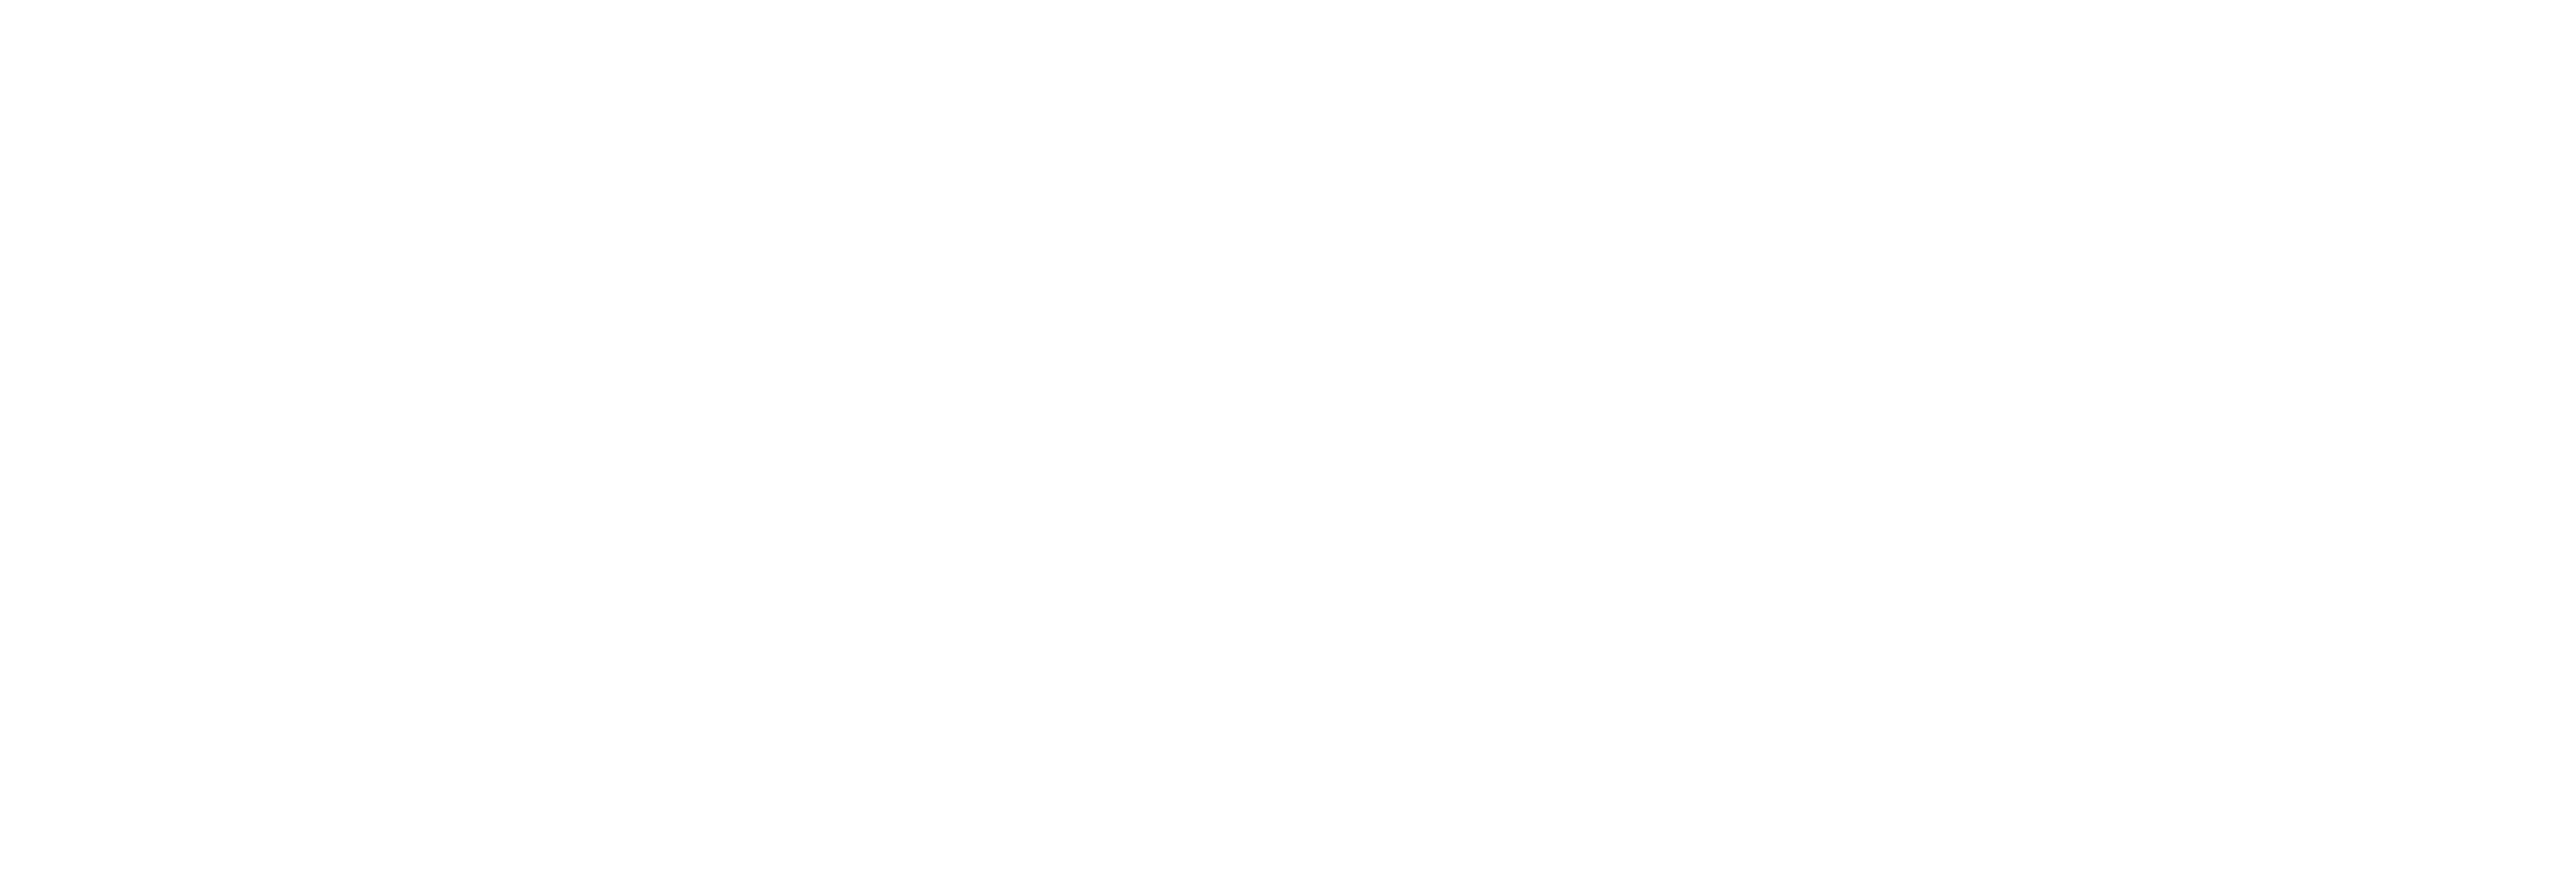 AniCura Bofarull Hospital Veterinari logo